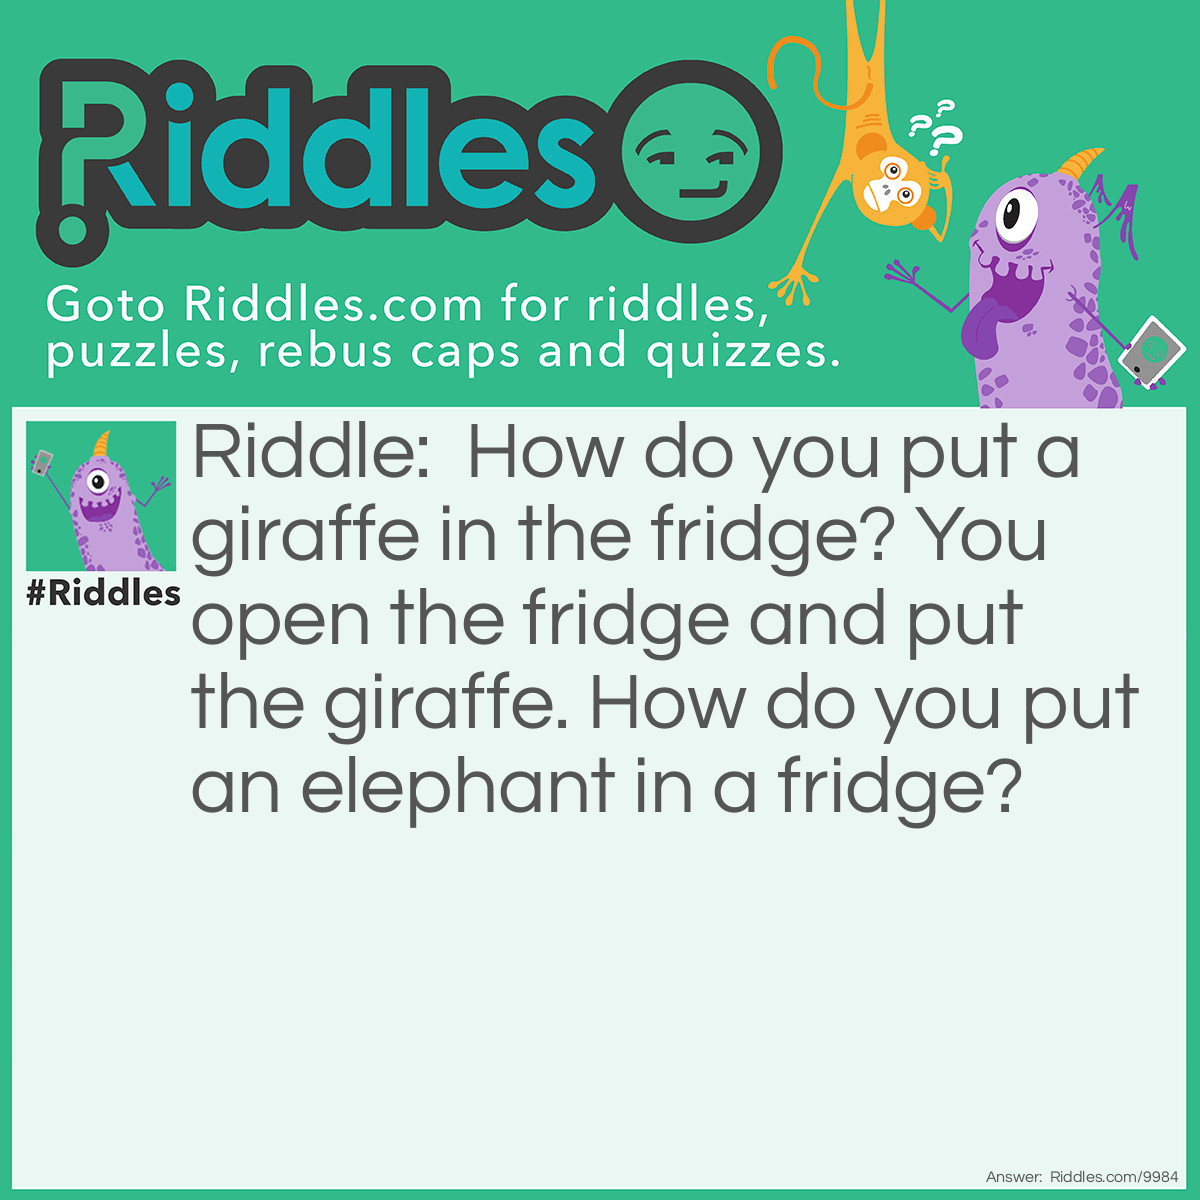 Riddle: How do you put a giraffe in the fridge? You open the fridge and put the giraffe. How do you put an elephant in a fridge? Answer: You open the fridge, remove the giraffe and place the elephant.